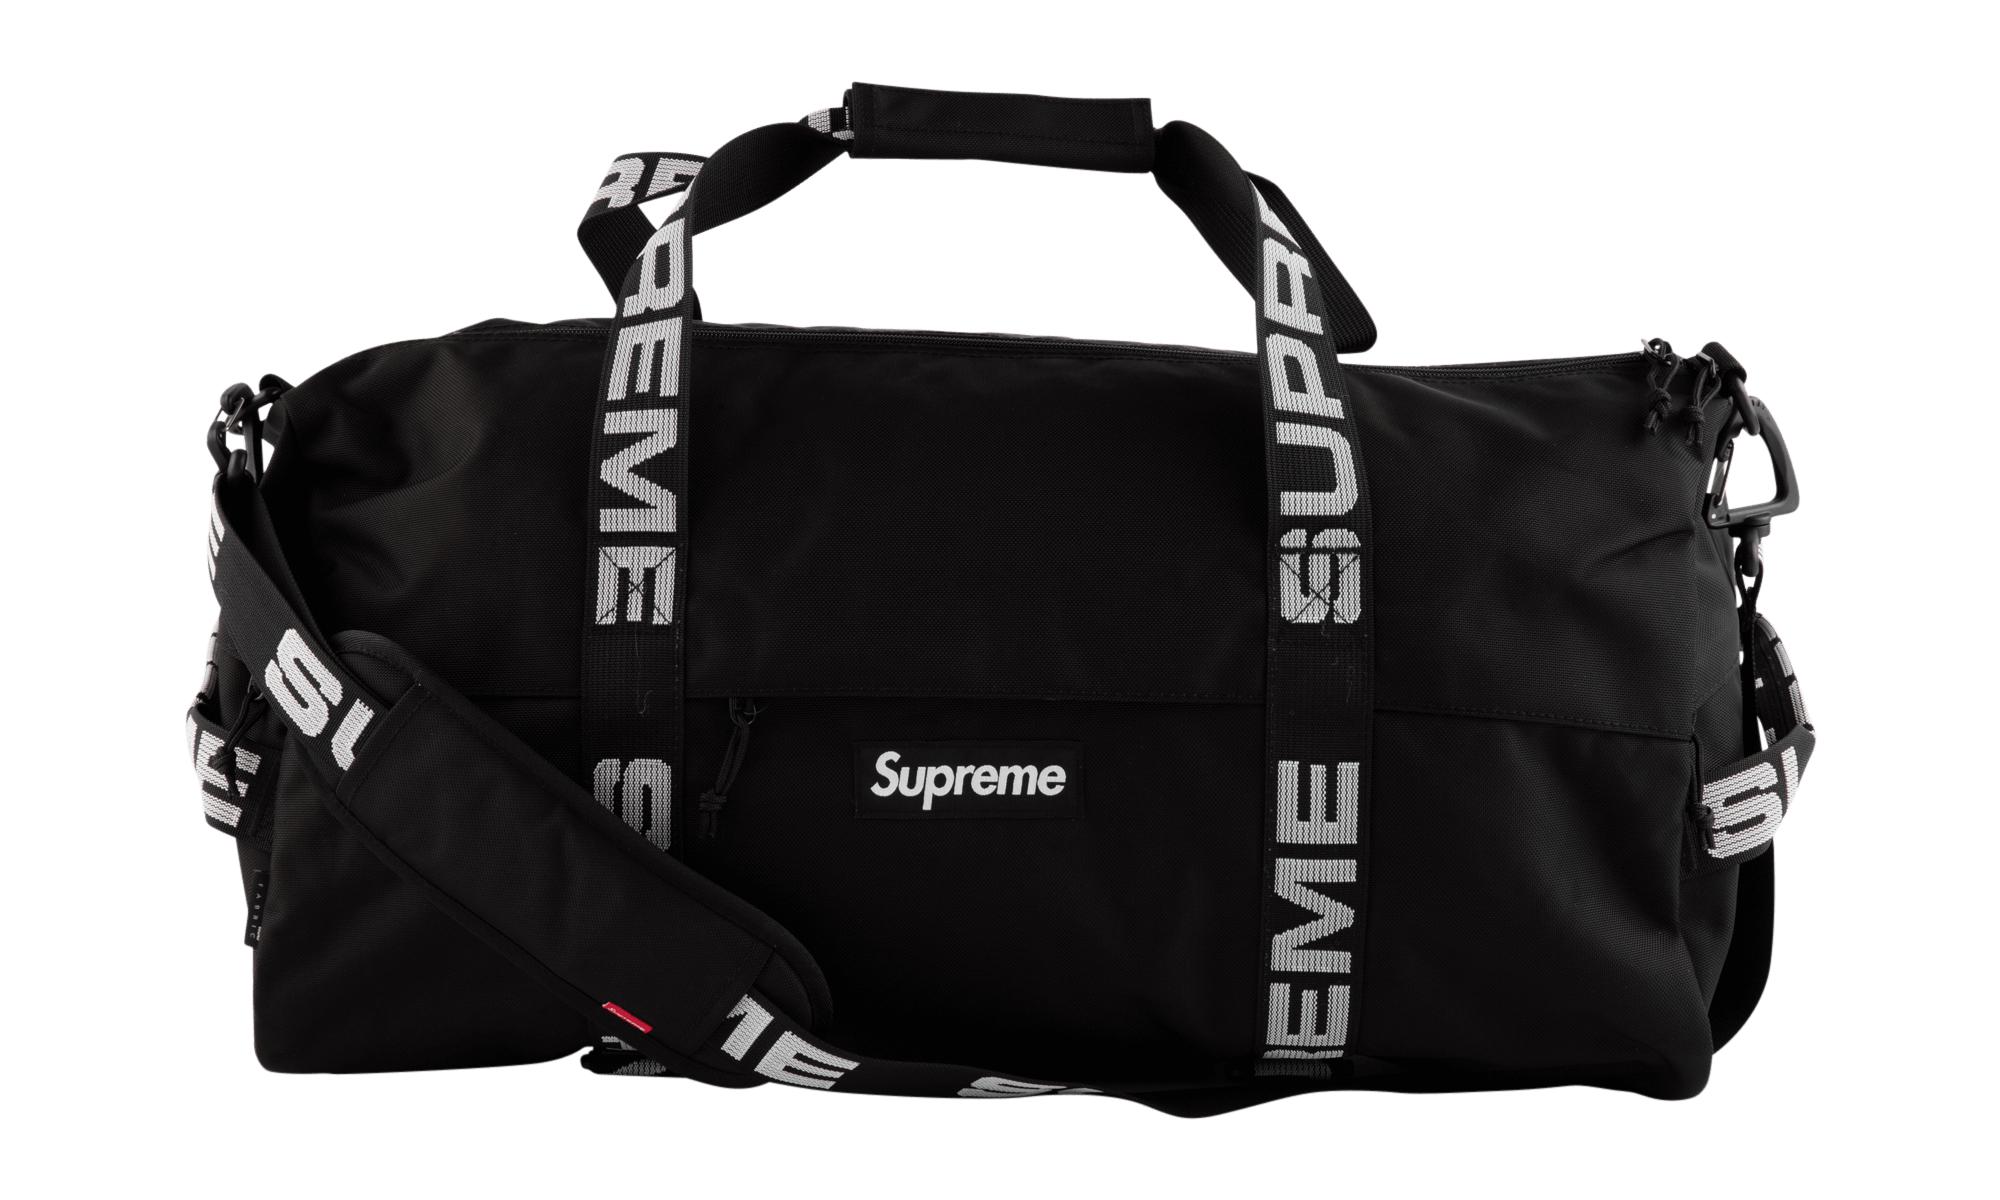 Lyst - Supreme Duffle Bag in Black for Men